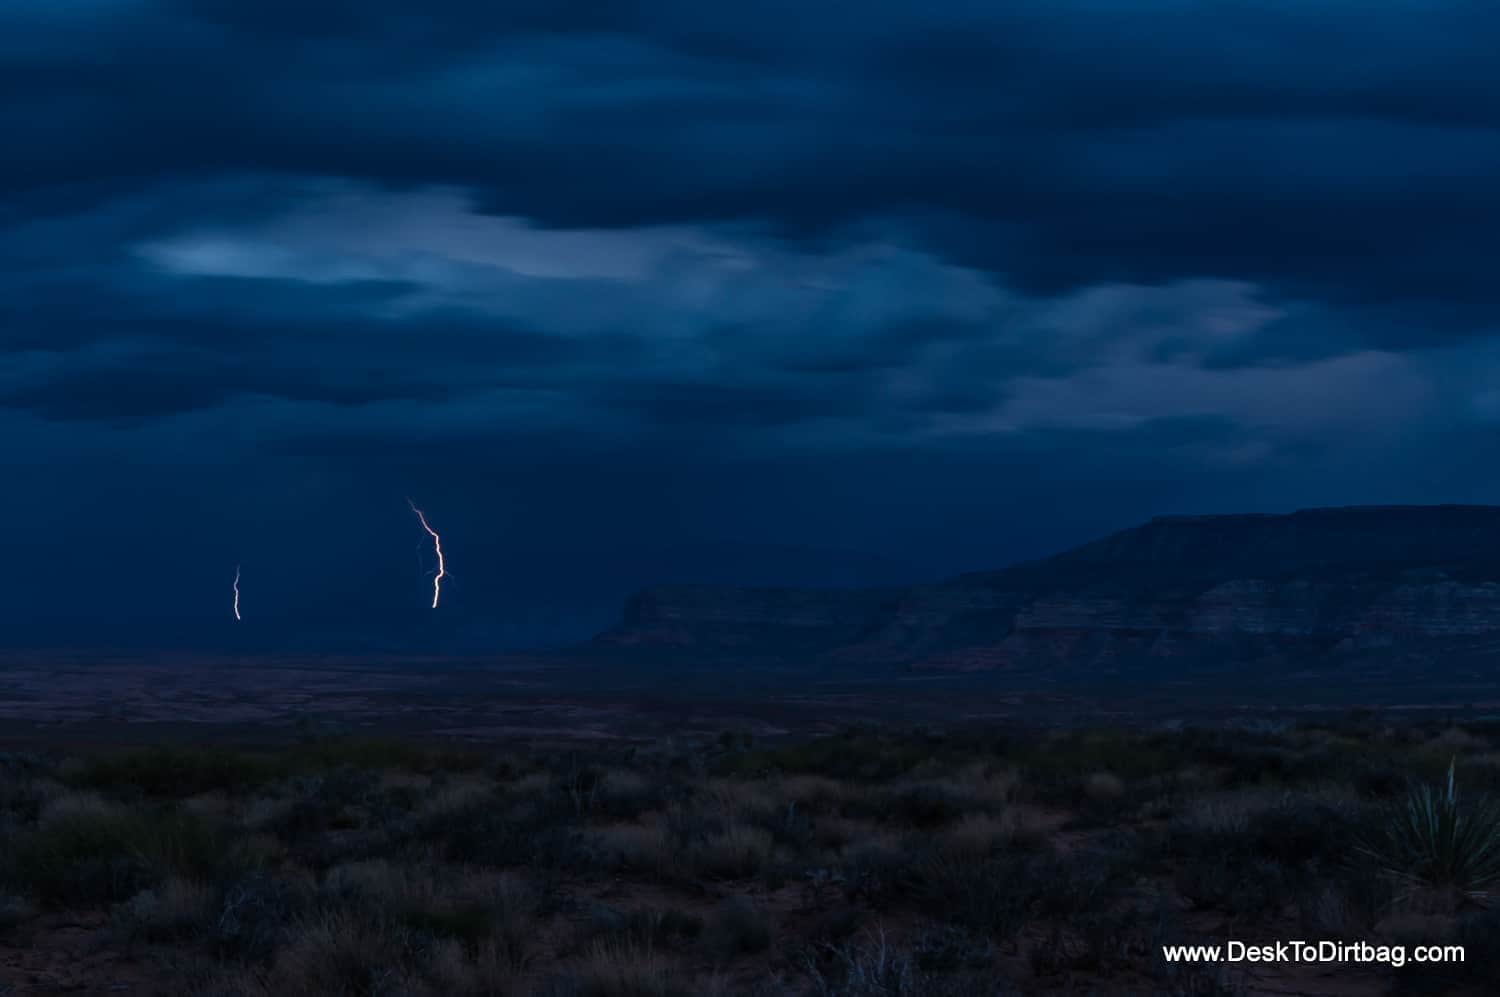 Lightning strikes in the deserts of Grand Staircase Escalante, Utah.